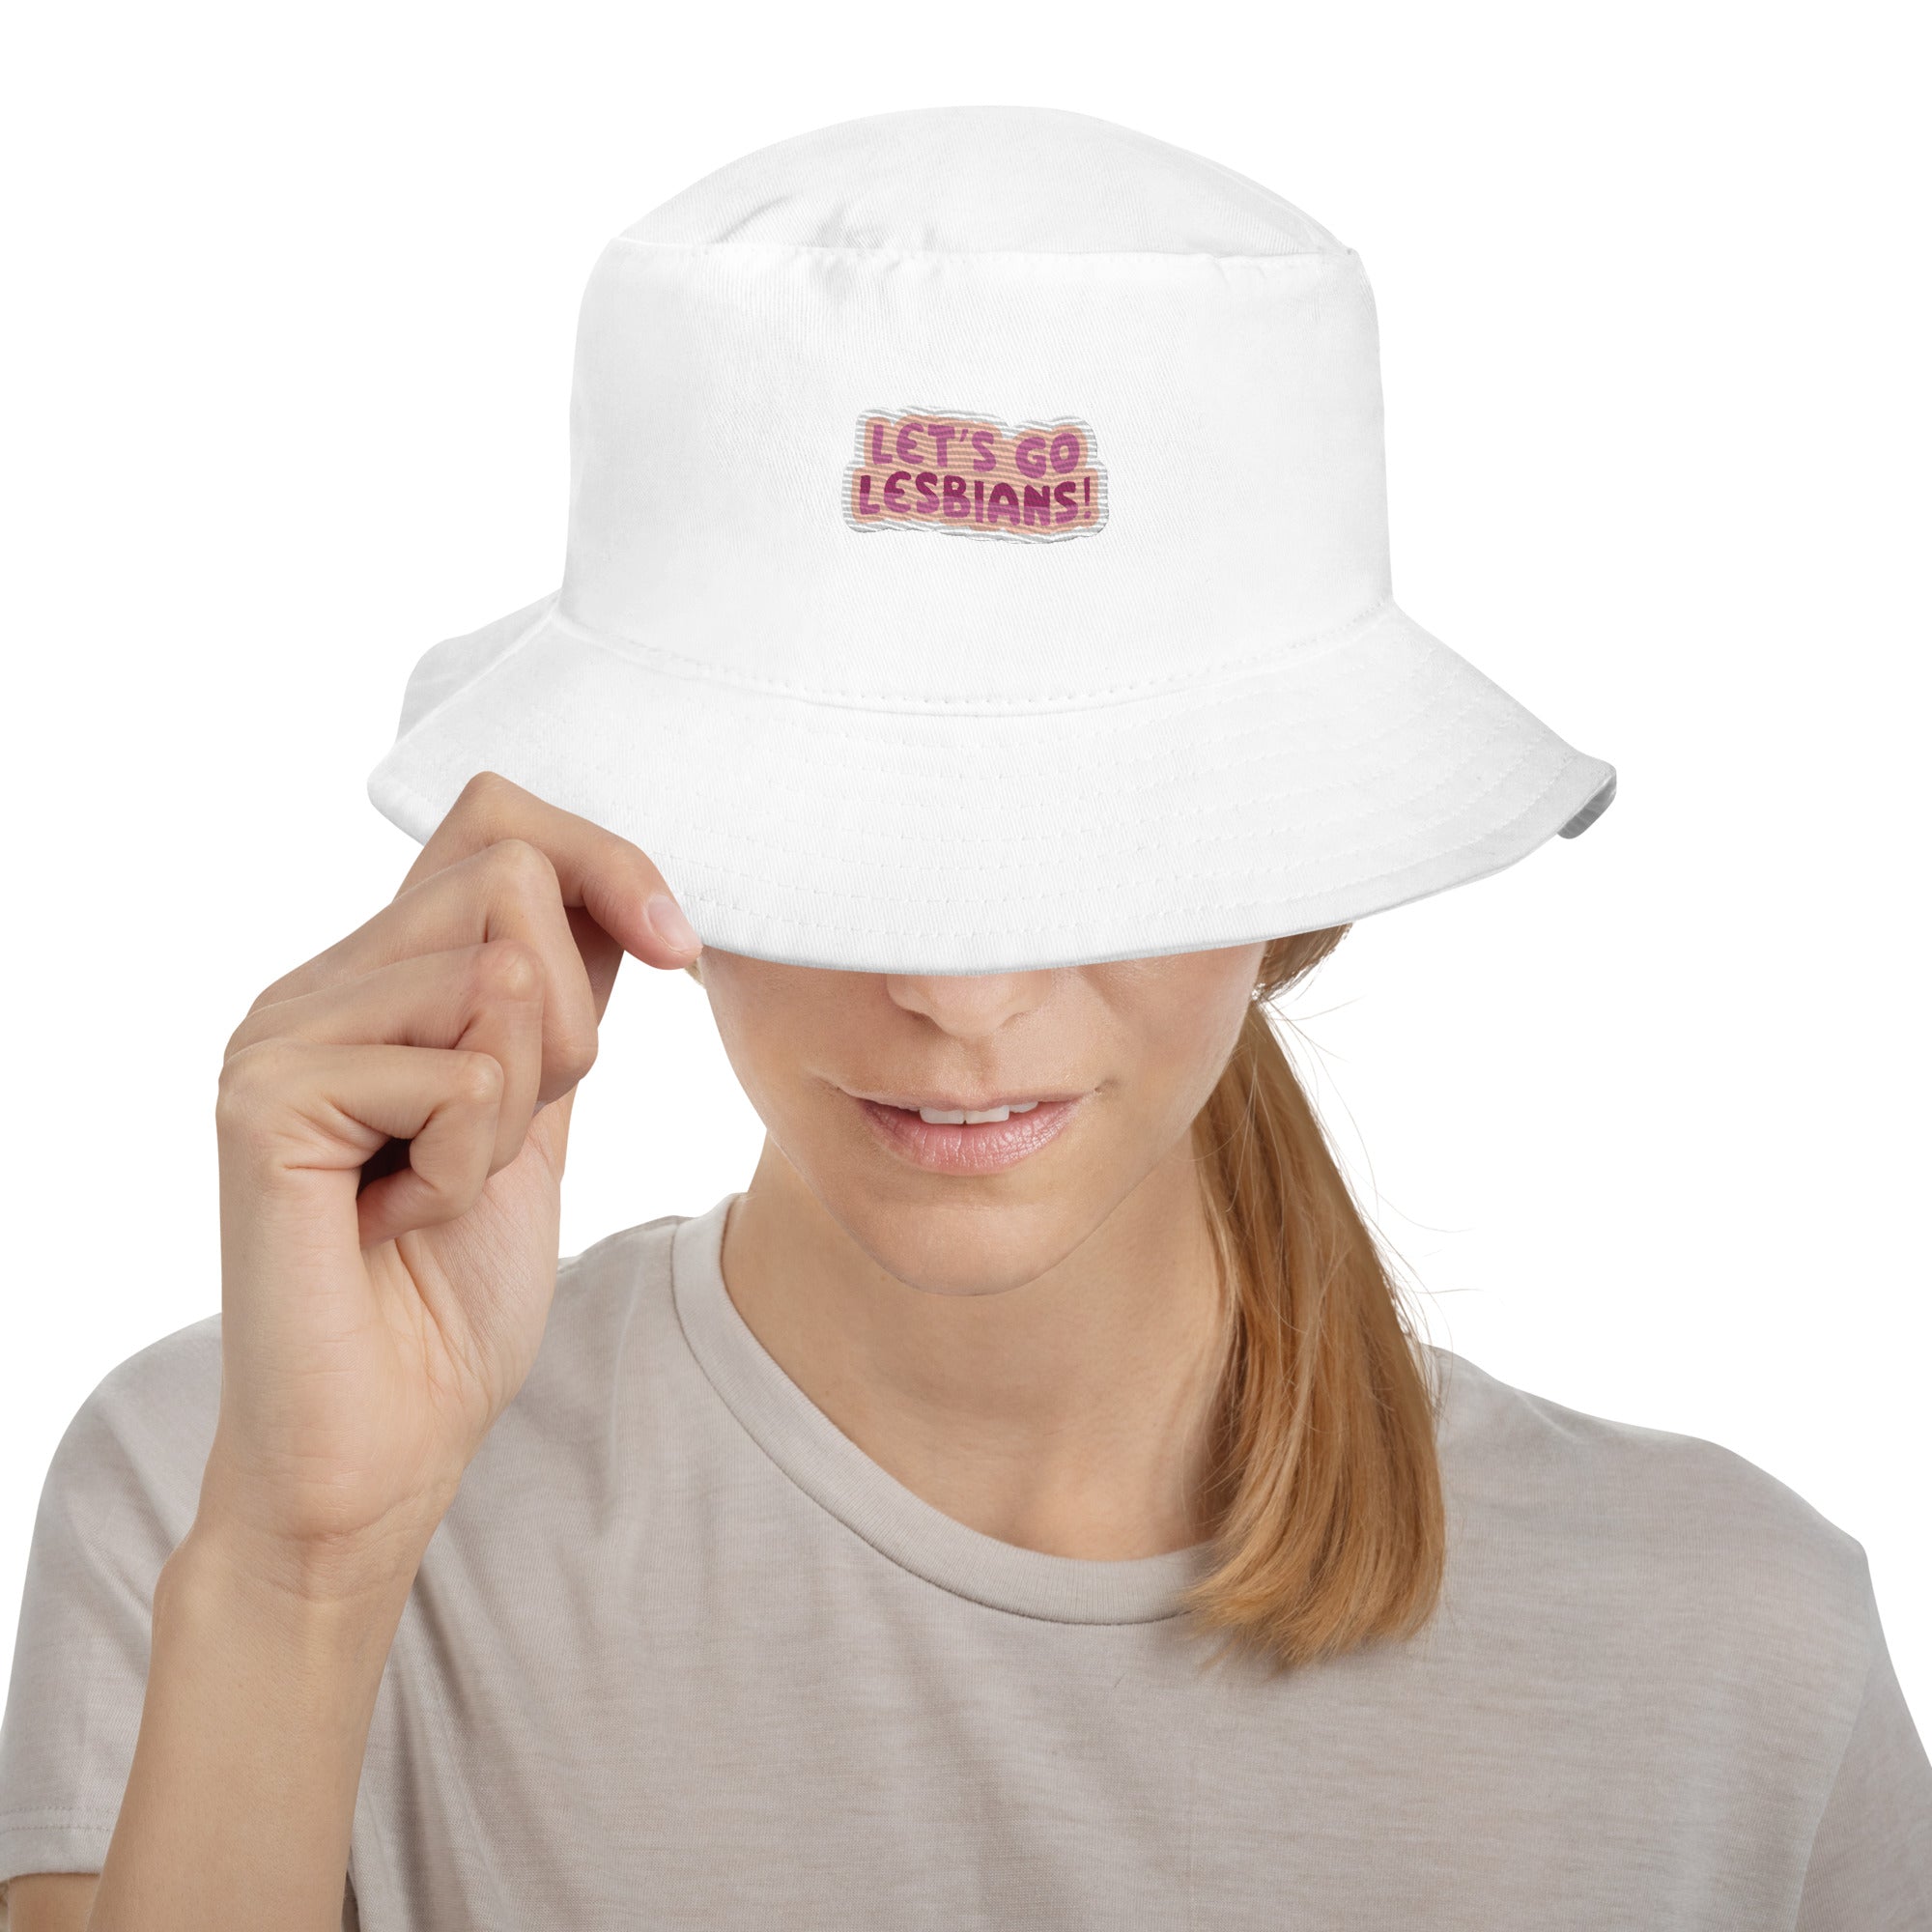 Lets go Lesbians Premium Embriodered Bucket Hat